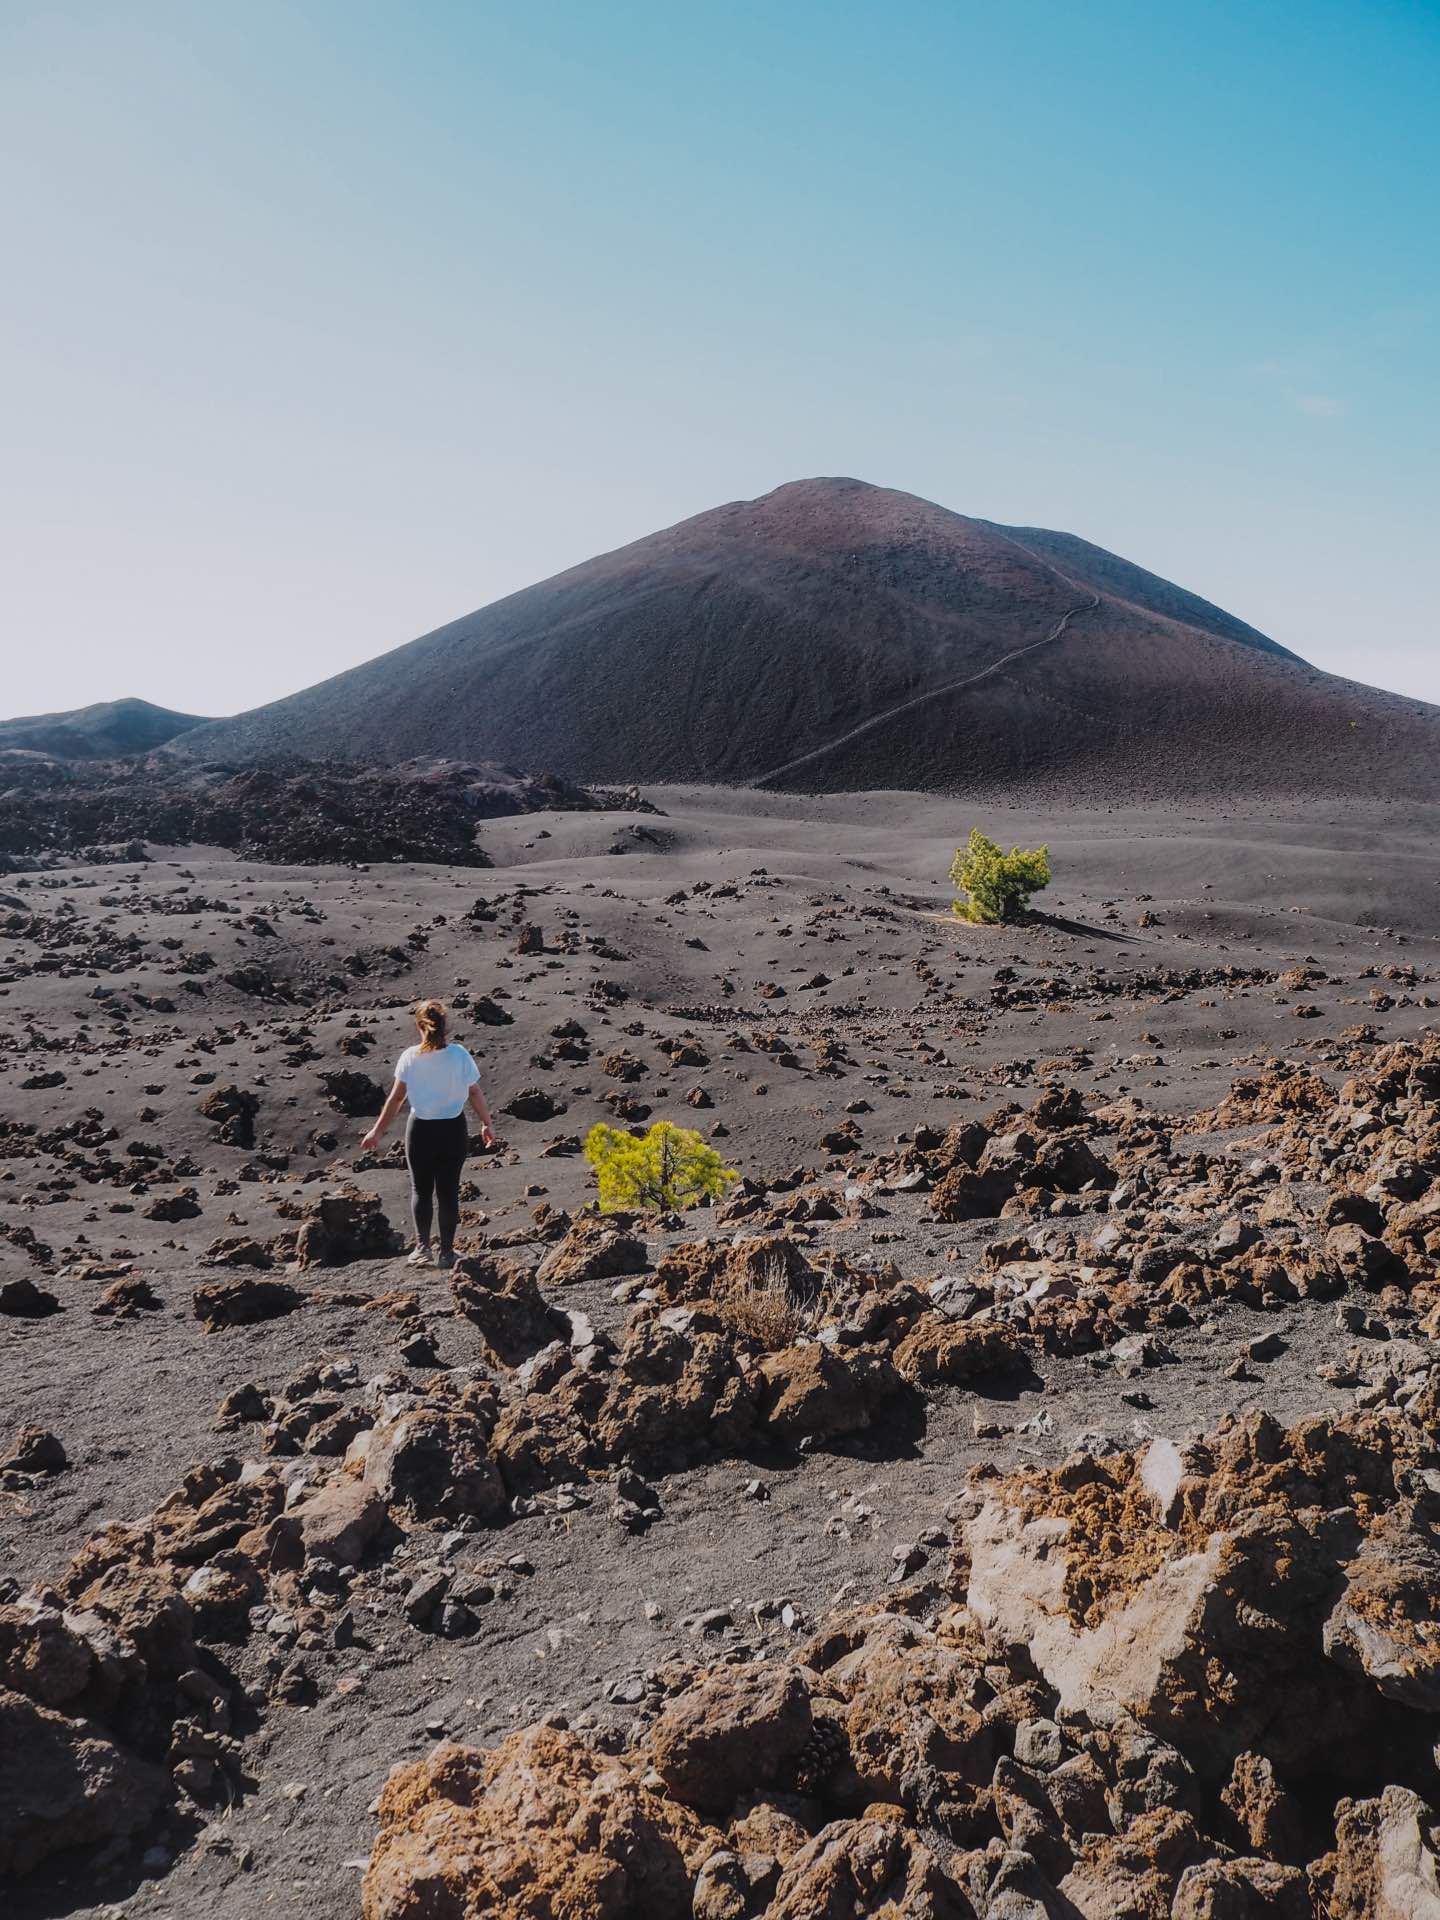 Sendero del Volcán Chinyero, una ruta llena de contrastes en Tenerife